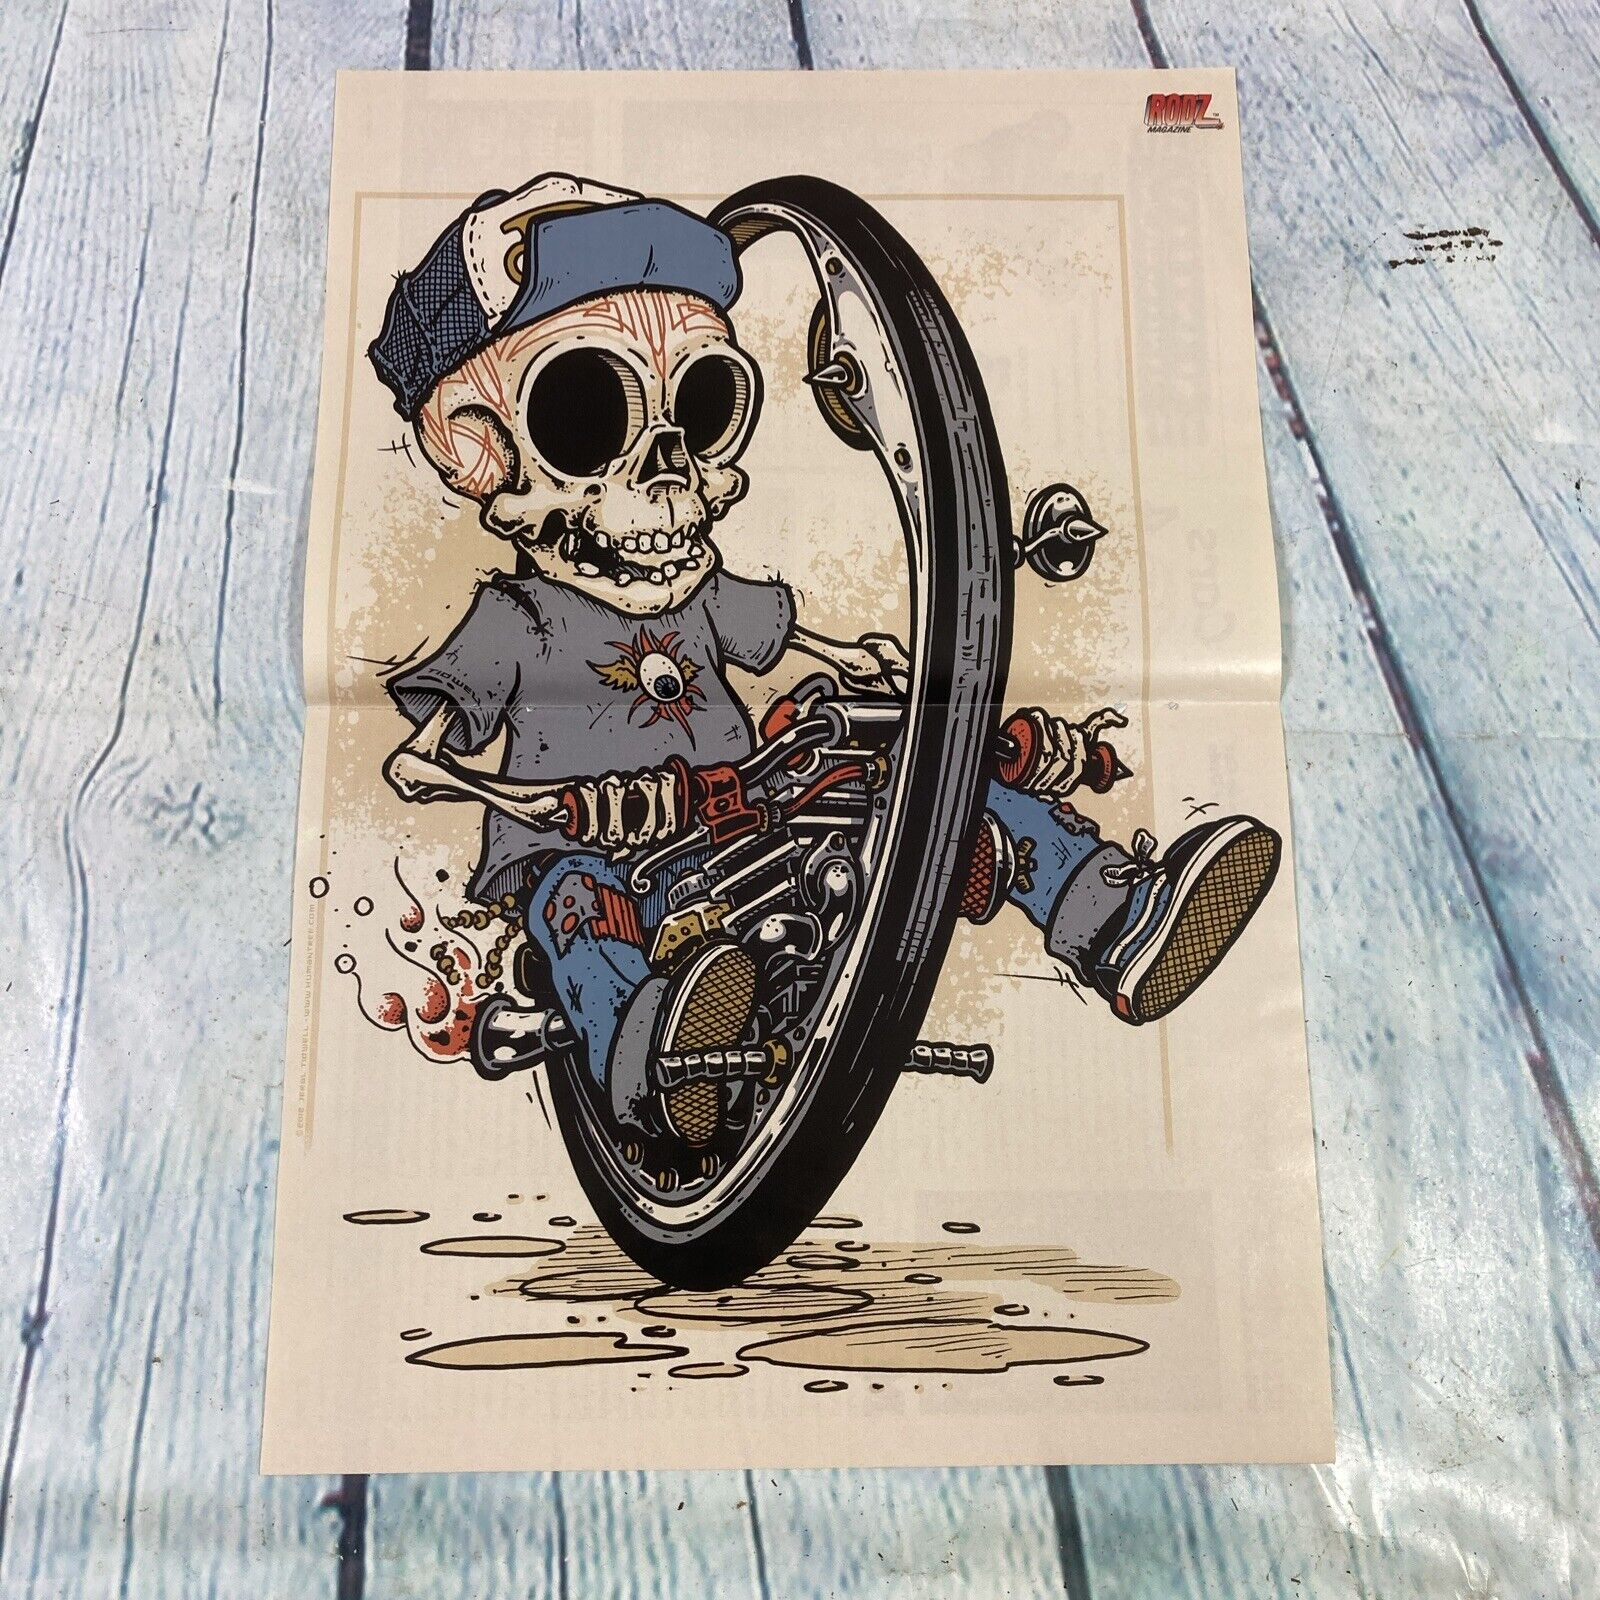 2015 Hot Rod Skeleton RODZ Centerfold Print Ad / Poster 2 Page Promo Art